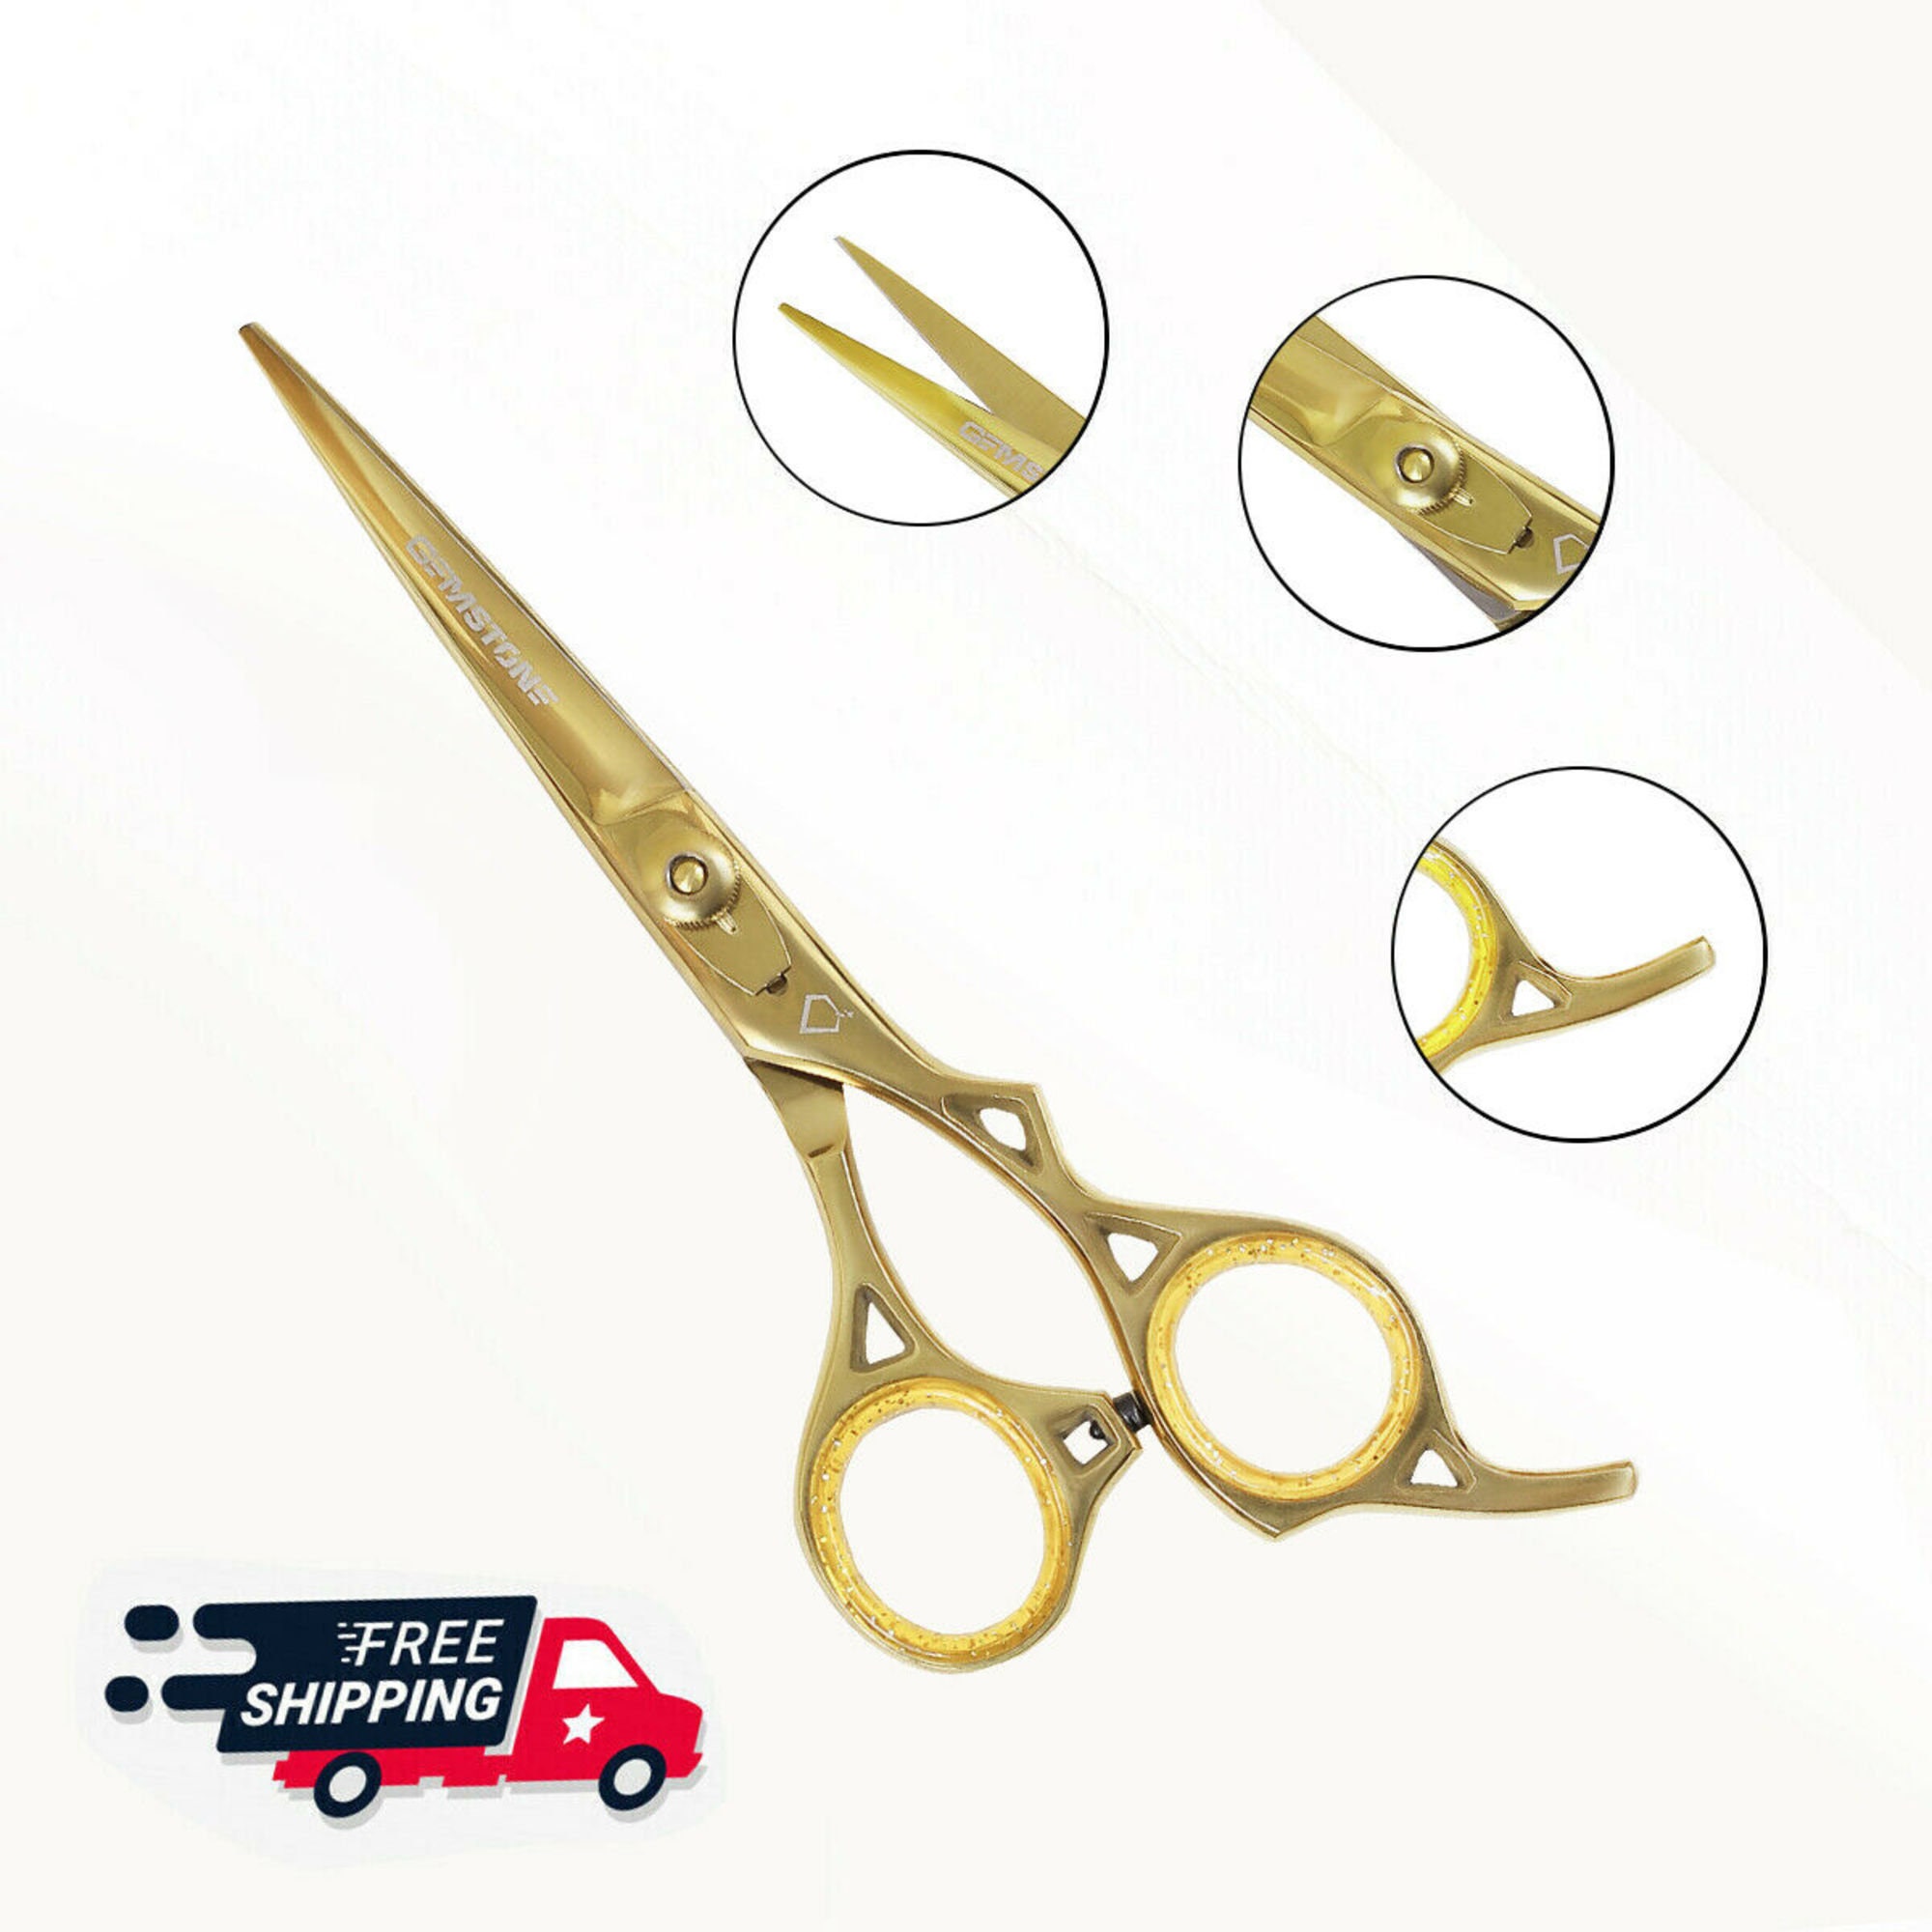 Professional Hair Cutting Japanese Scissors Barber Stylist Salon Shears 6  VG10 Stainless Steel. 